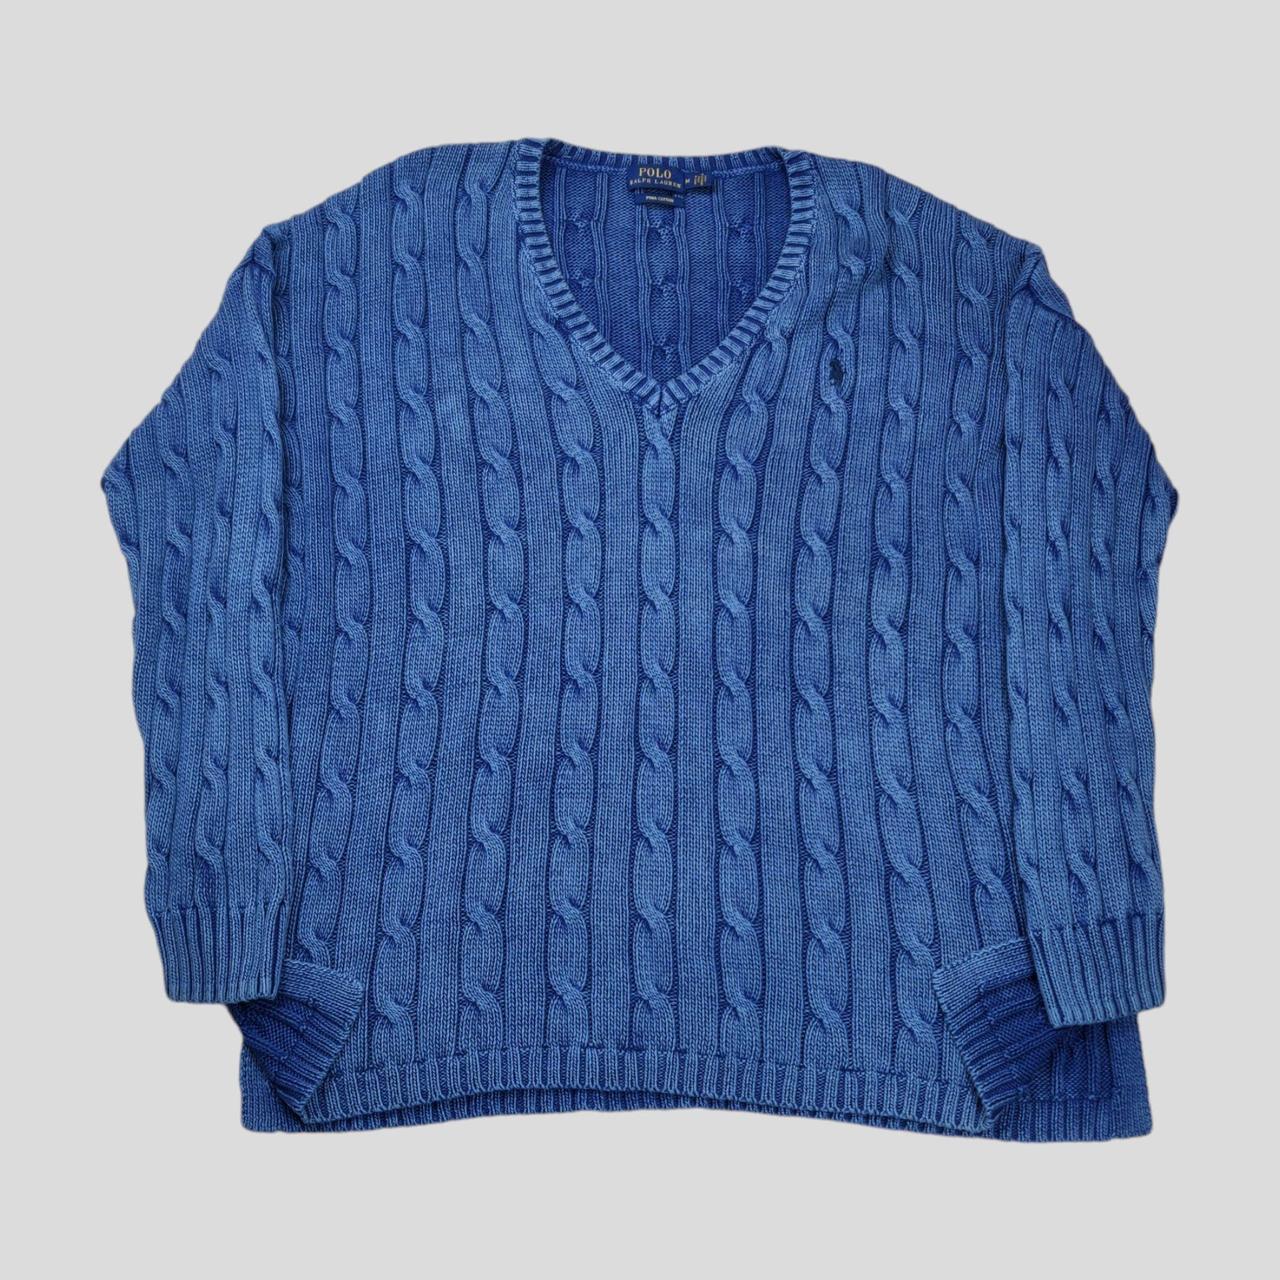 POLO RALPH LAUREN - Women's Pima cotton cable sweater 